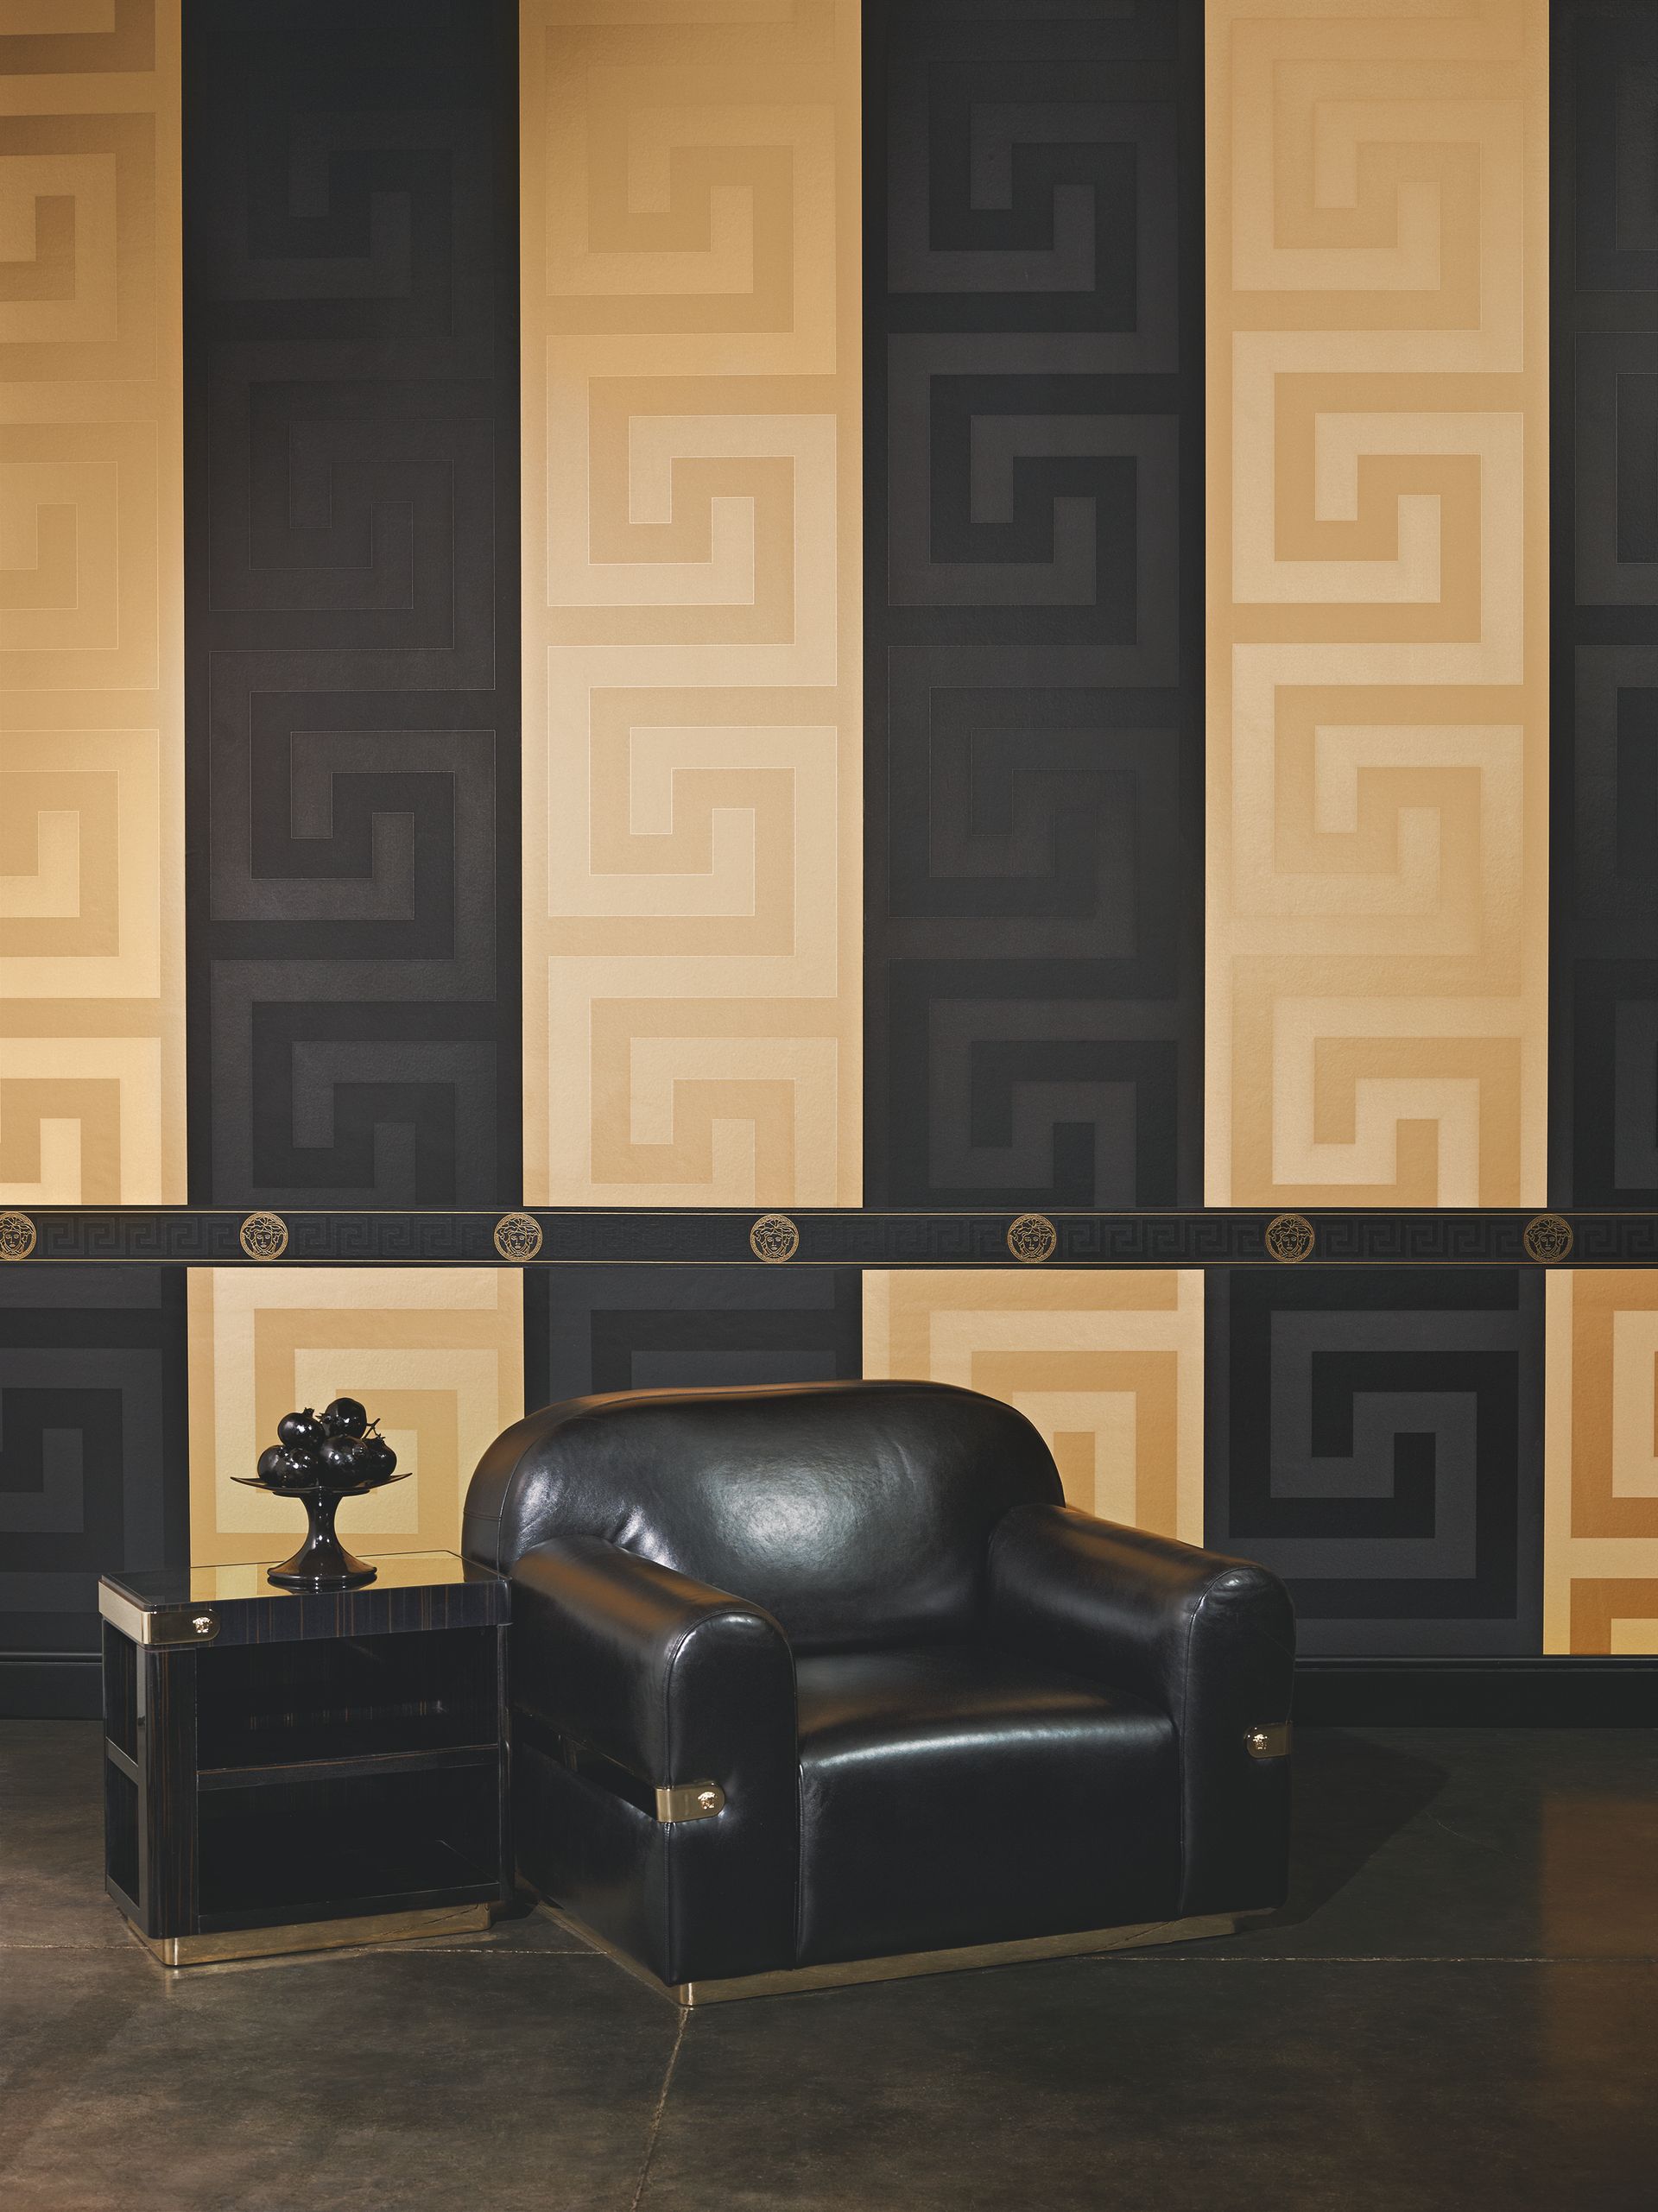 Versace wallpaper Versace 3, Design Tapete, schwarz, gold 935224